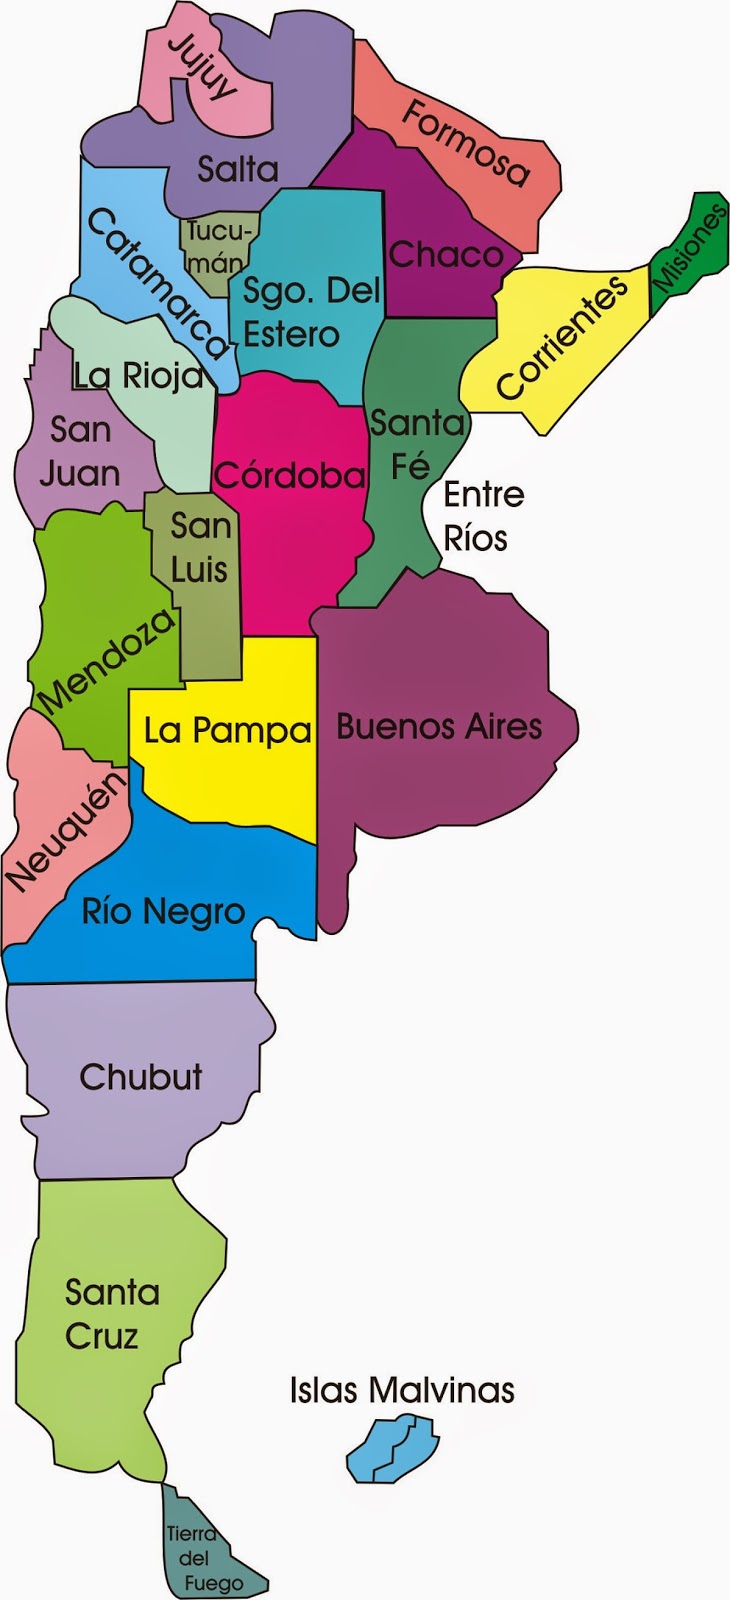 Escuela Rodolfo Walsh - Bianca Costamagna: Mapa Argentina